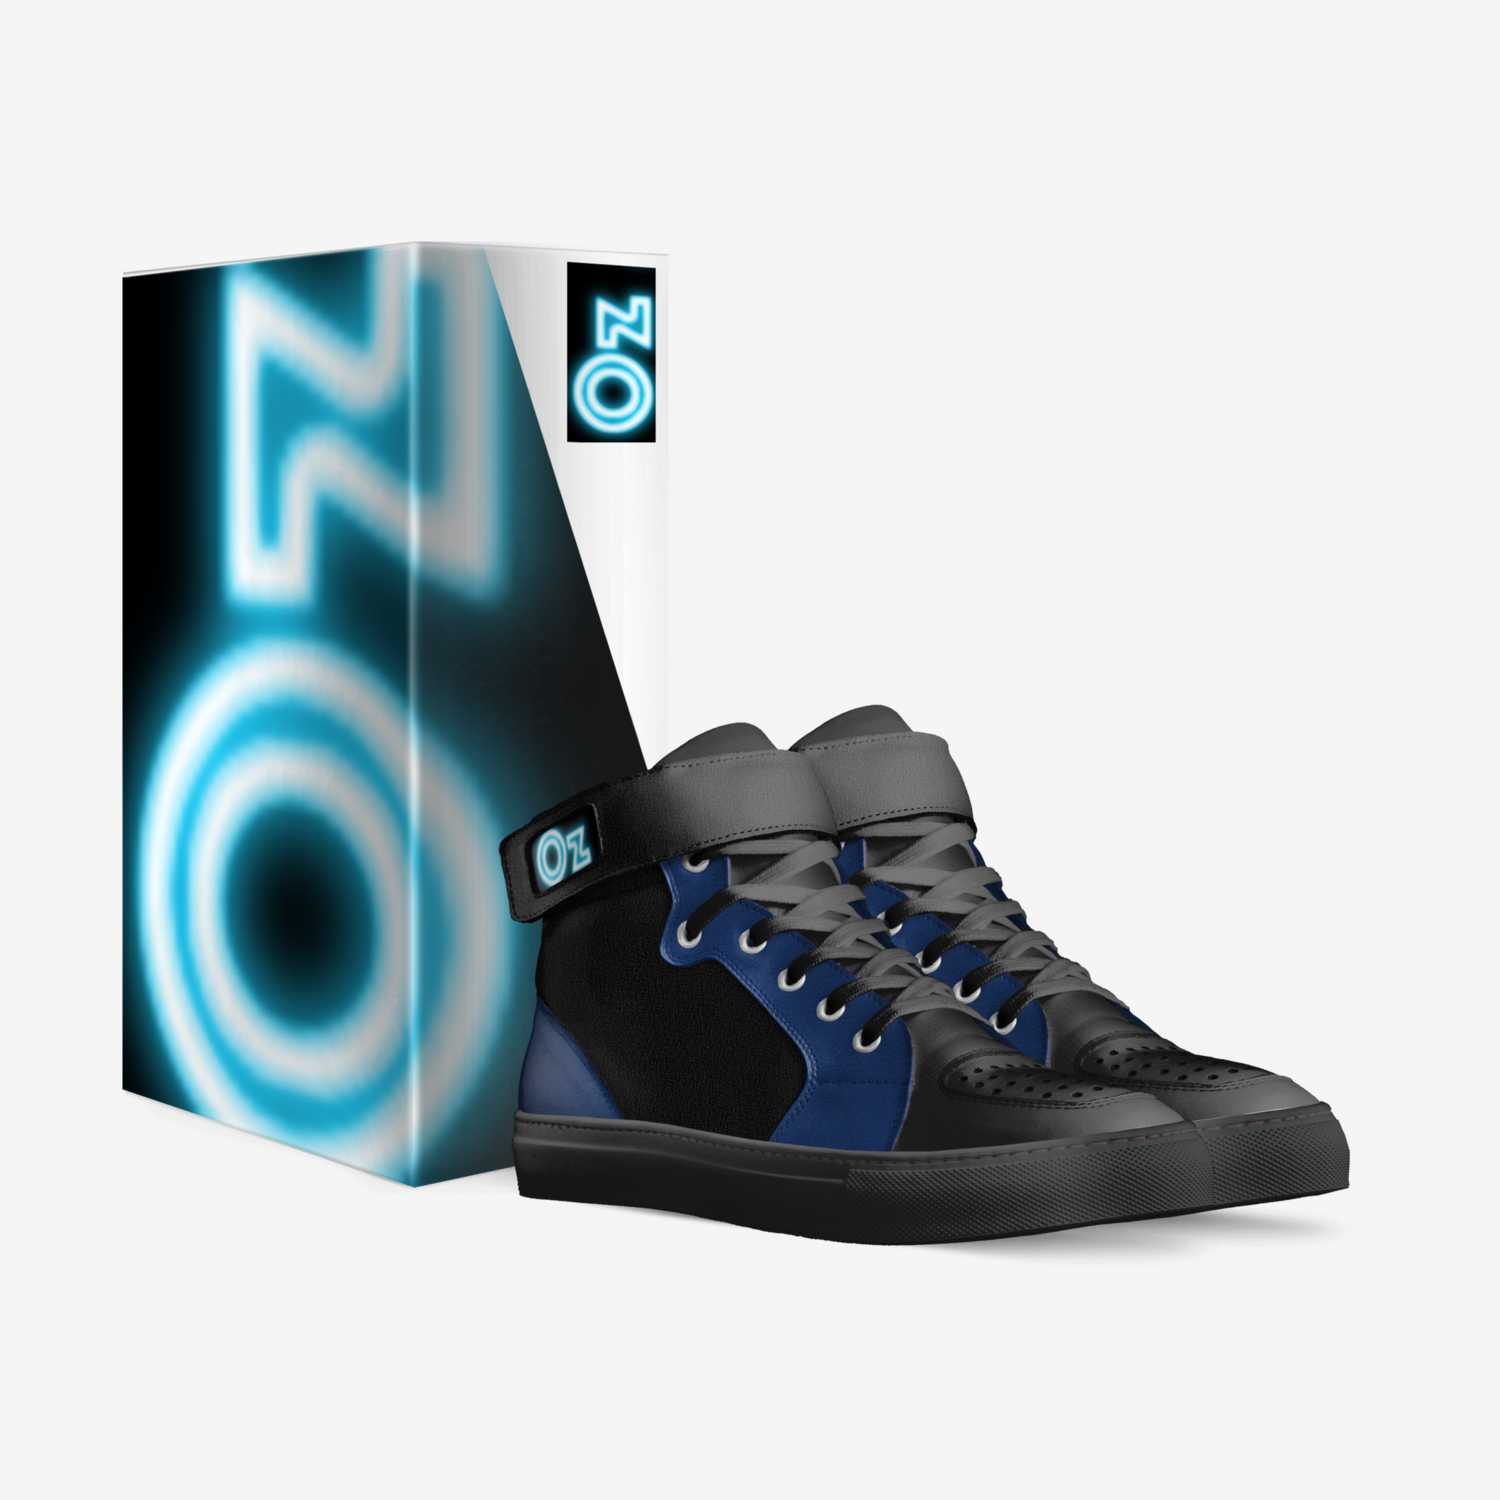 Oz Wear custom made in Italy shoes by Jackson Jermyn | Box view